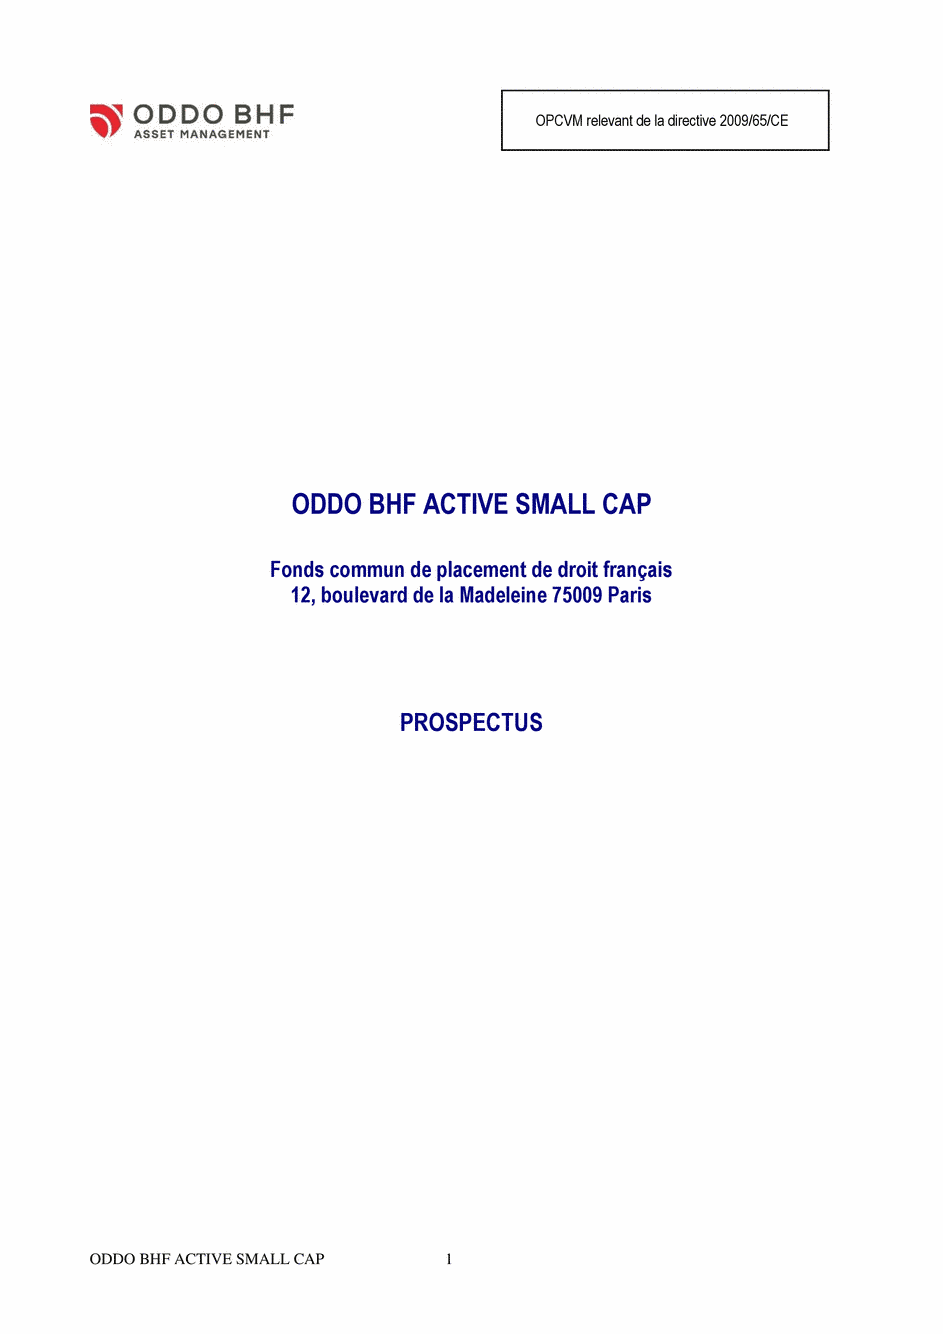 Prospectus ODDO BHF ACTIVE SMALL CAP CR-EUR - 15/07/2020 - Français